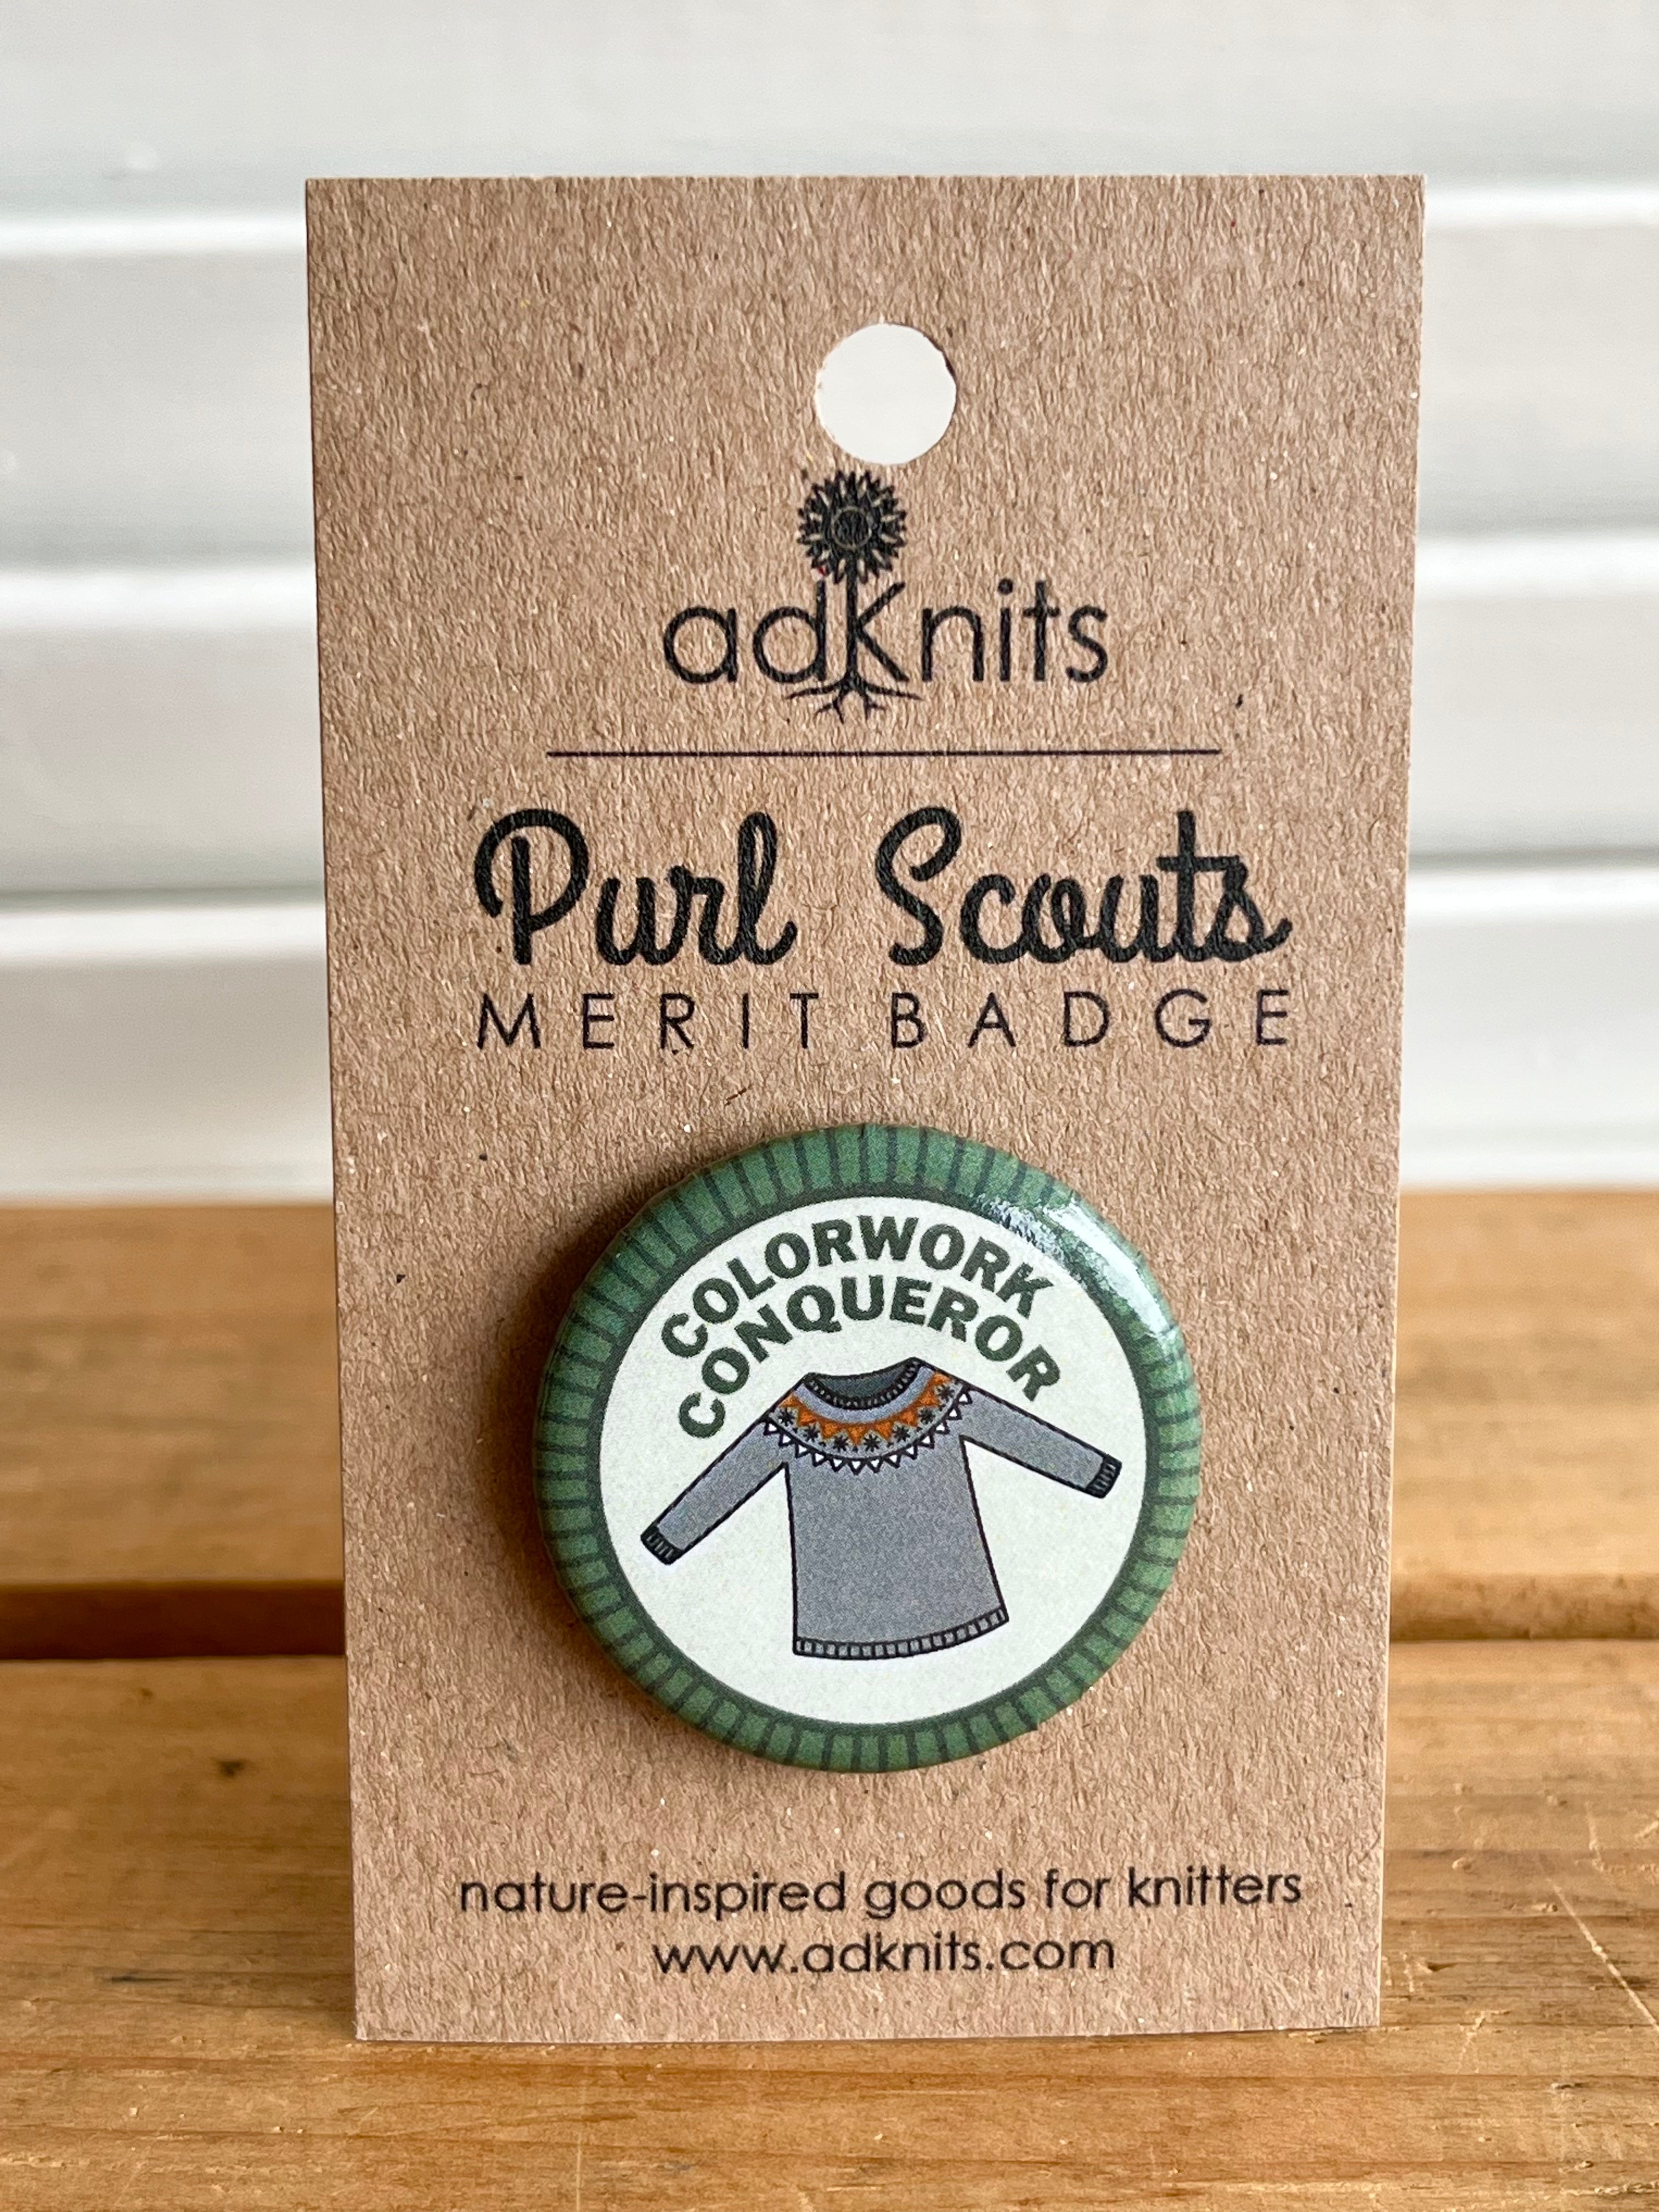 Colorwork Conqueror - Purl Scouts Merit Badge